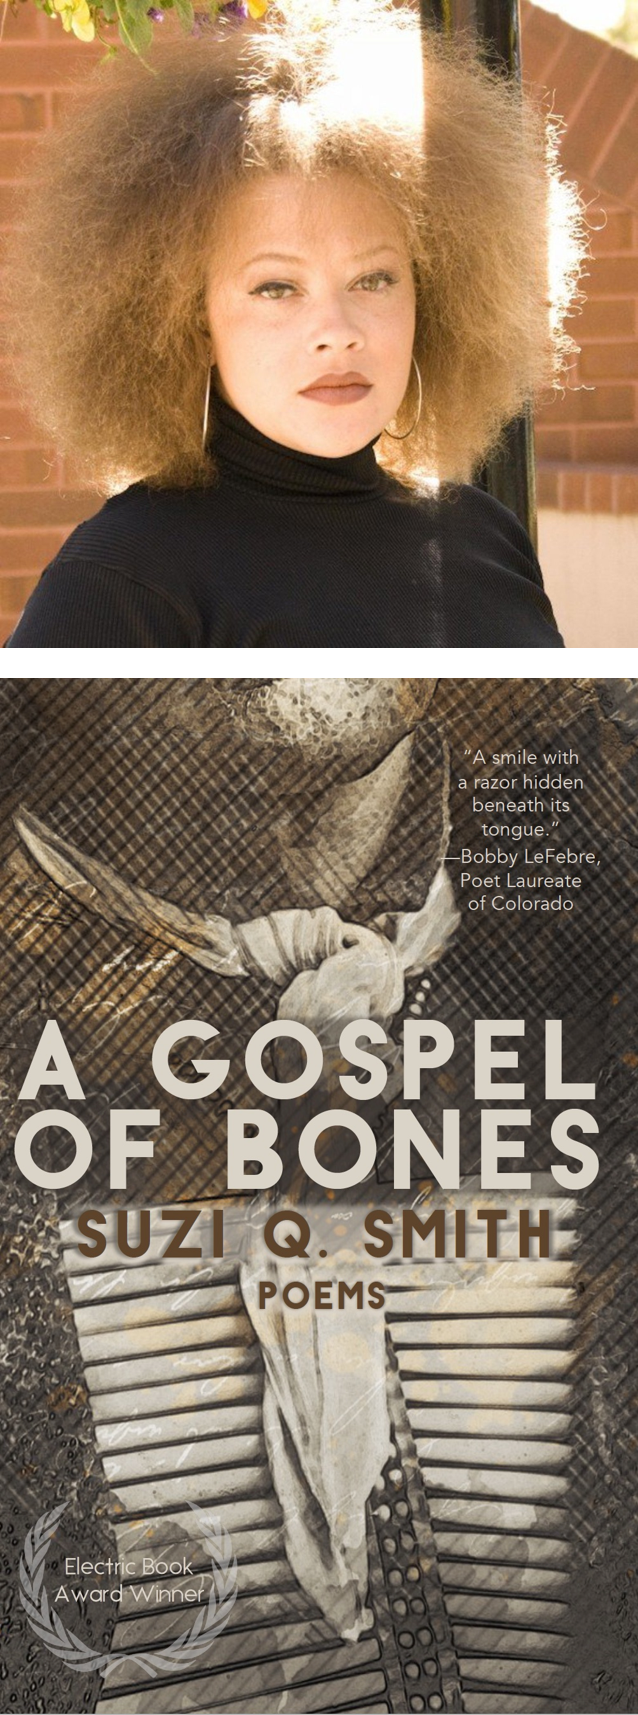 Suzi Q. Smith and book cover of A Gospel of Bones